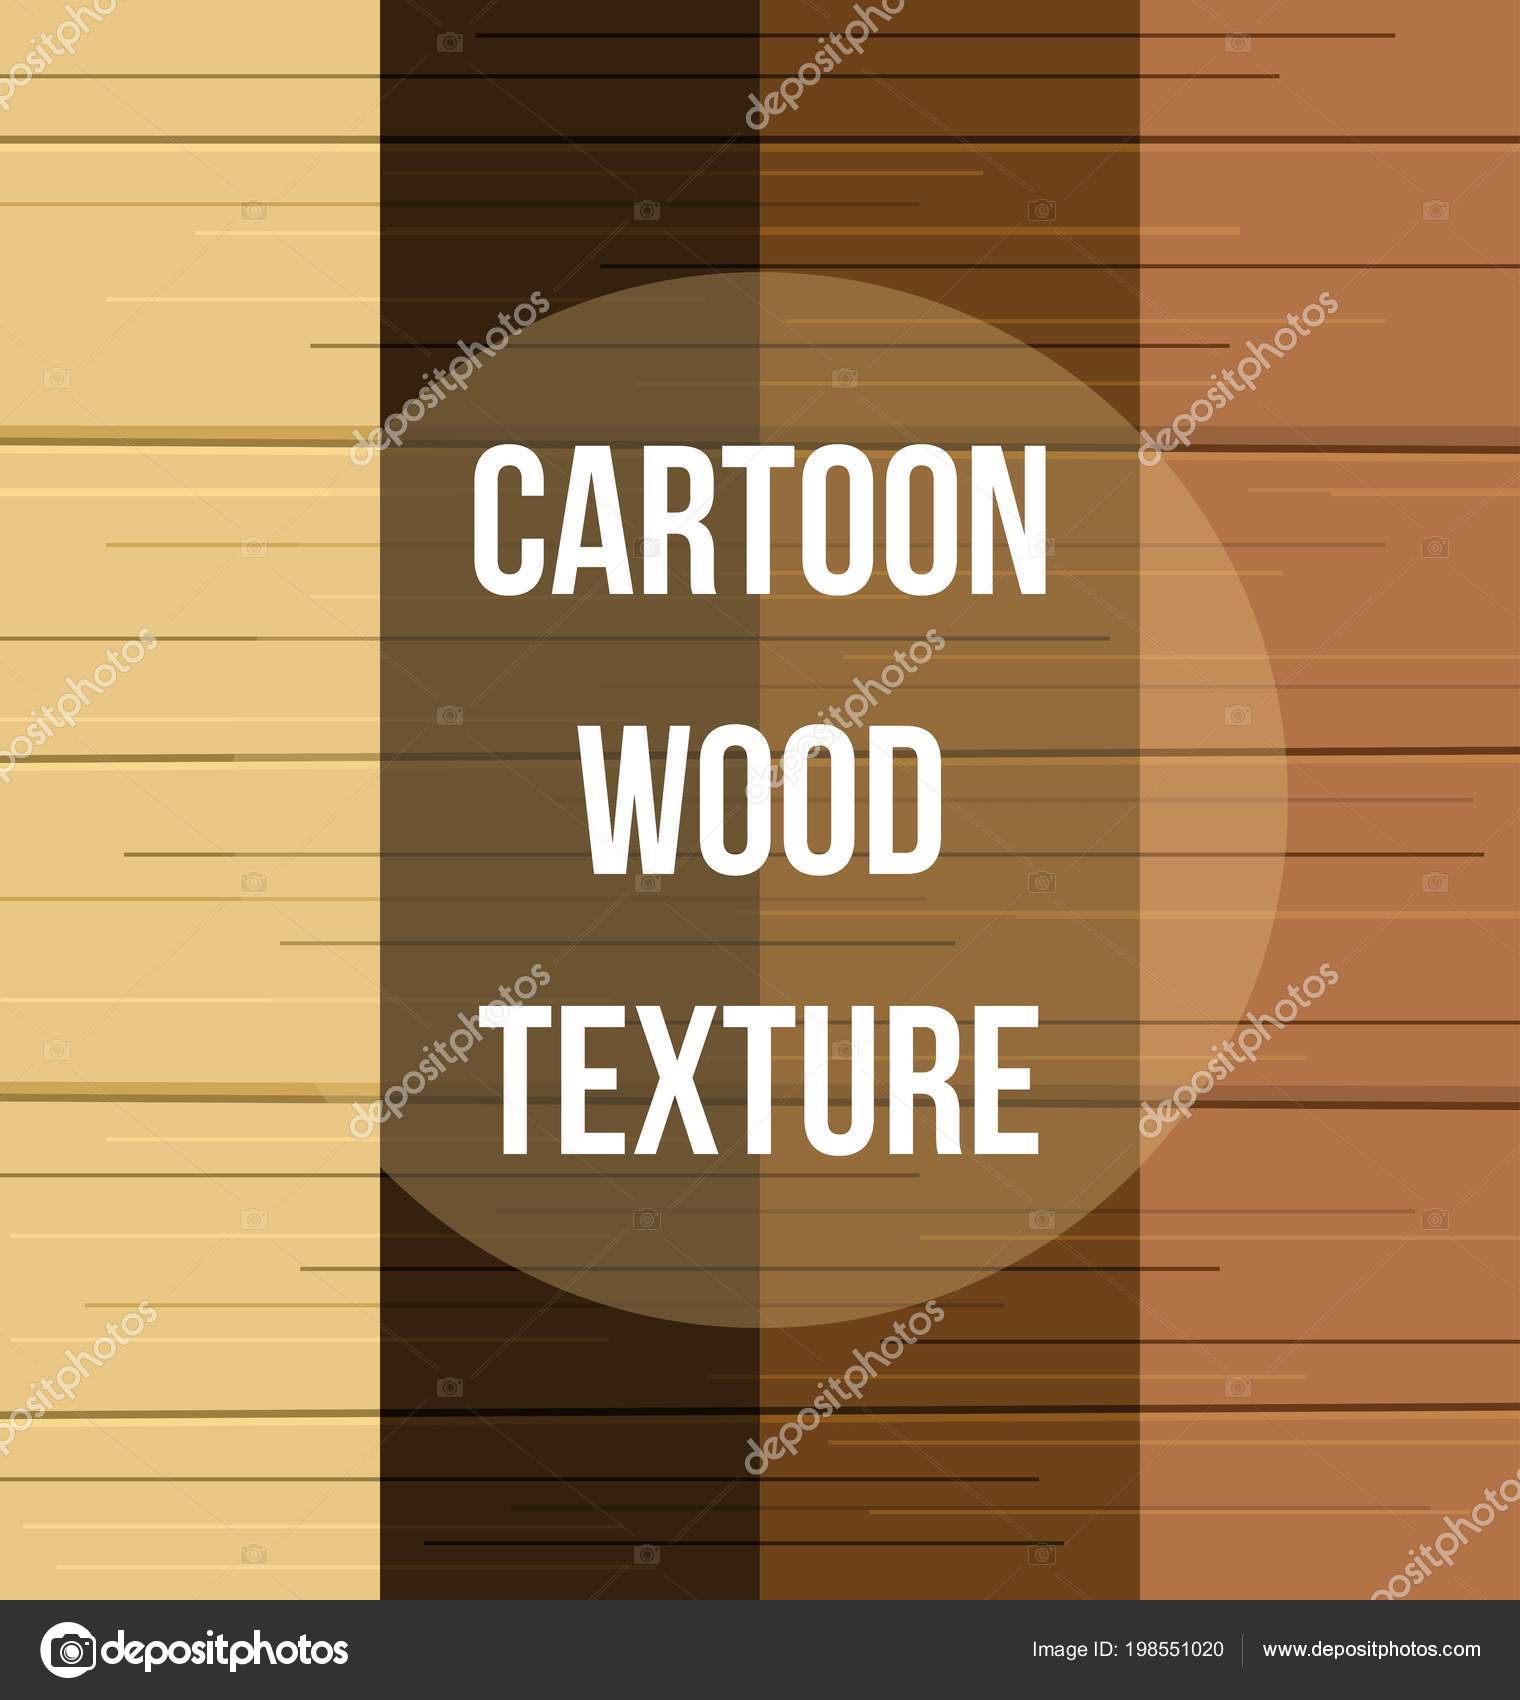 Cartoon wood texture Vector Art Stock Images | Depositphotos